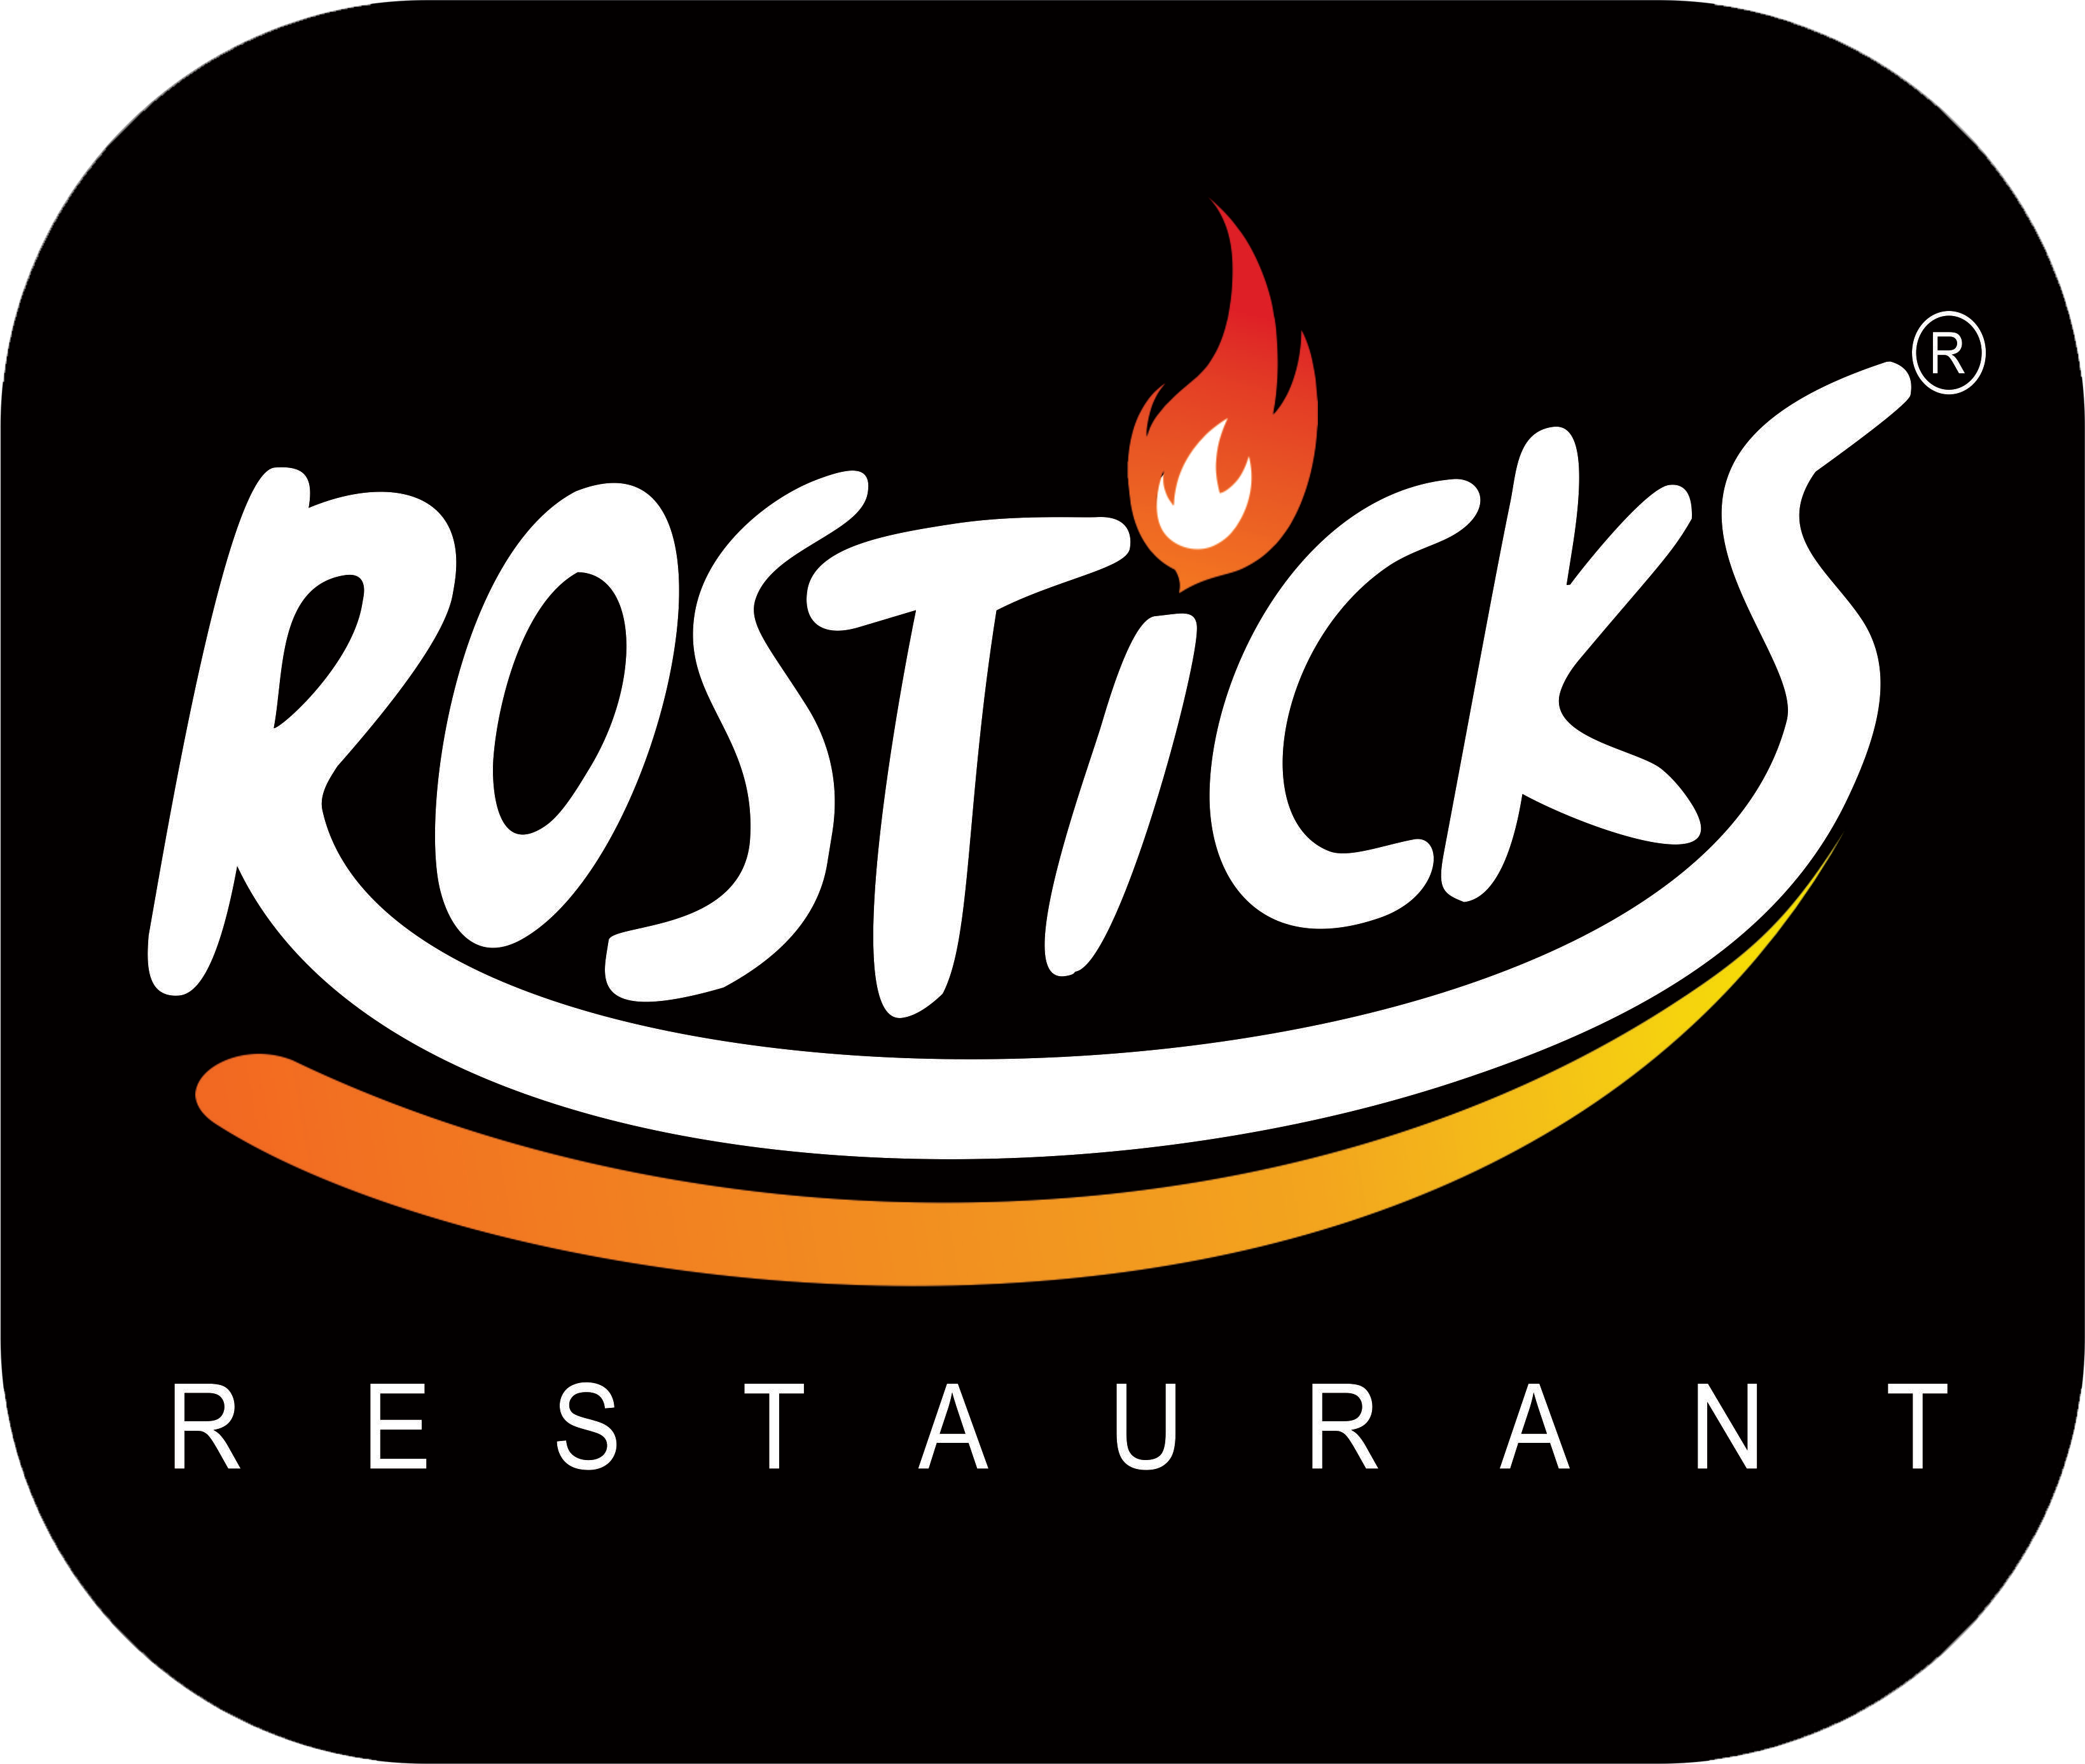 Rosticks